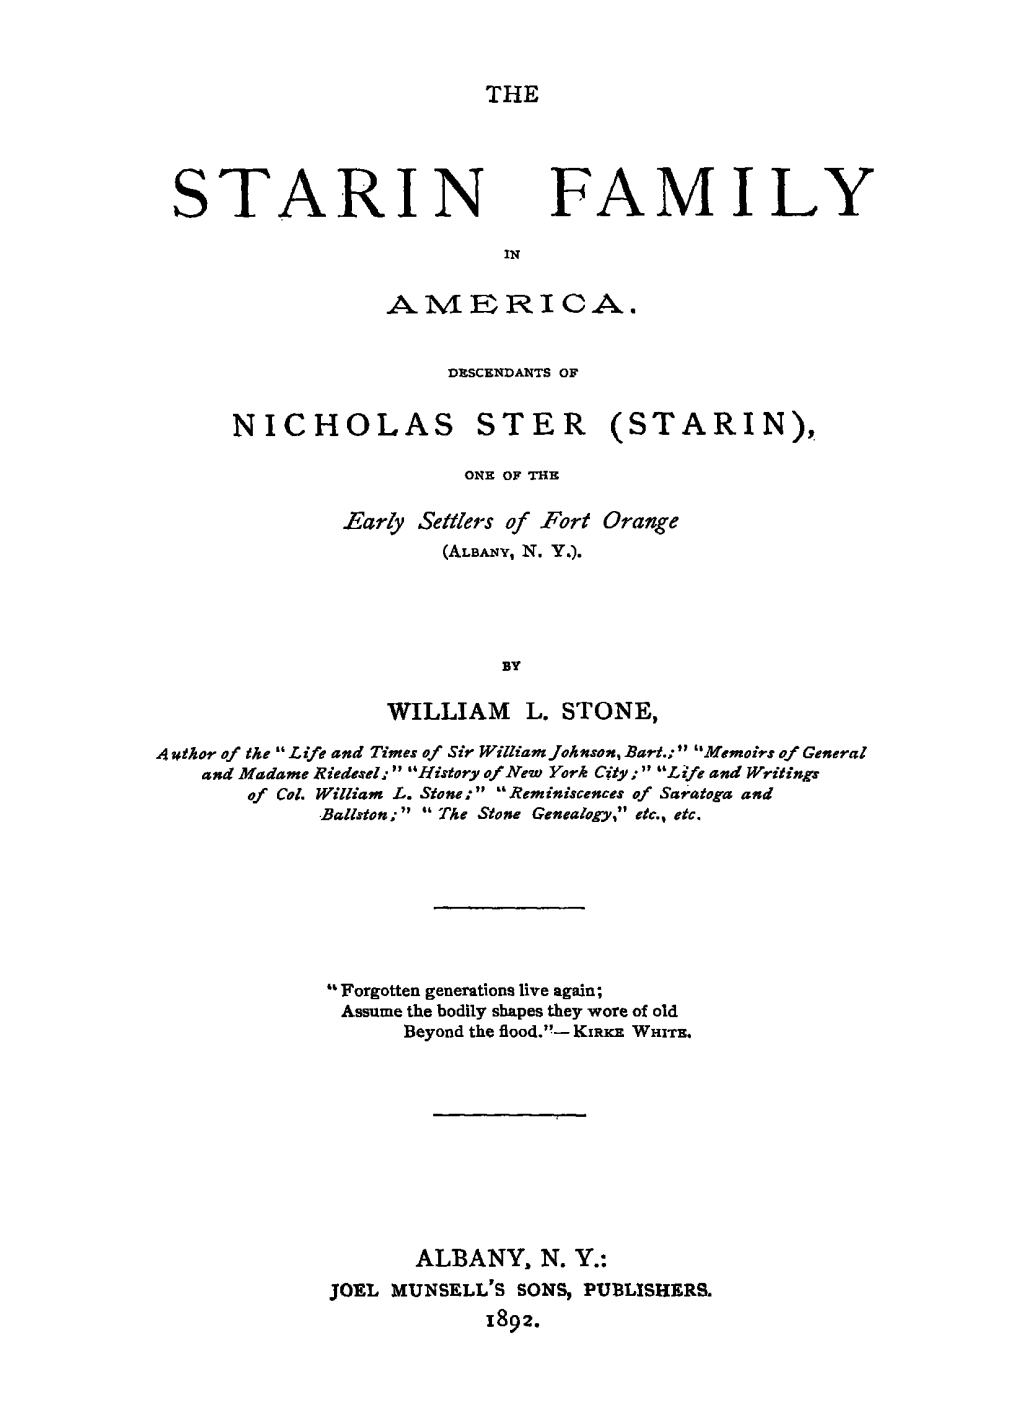 Starin Family